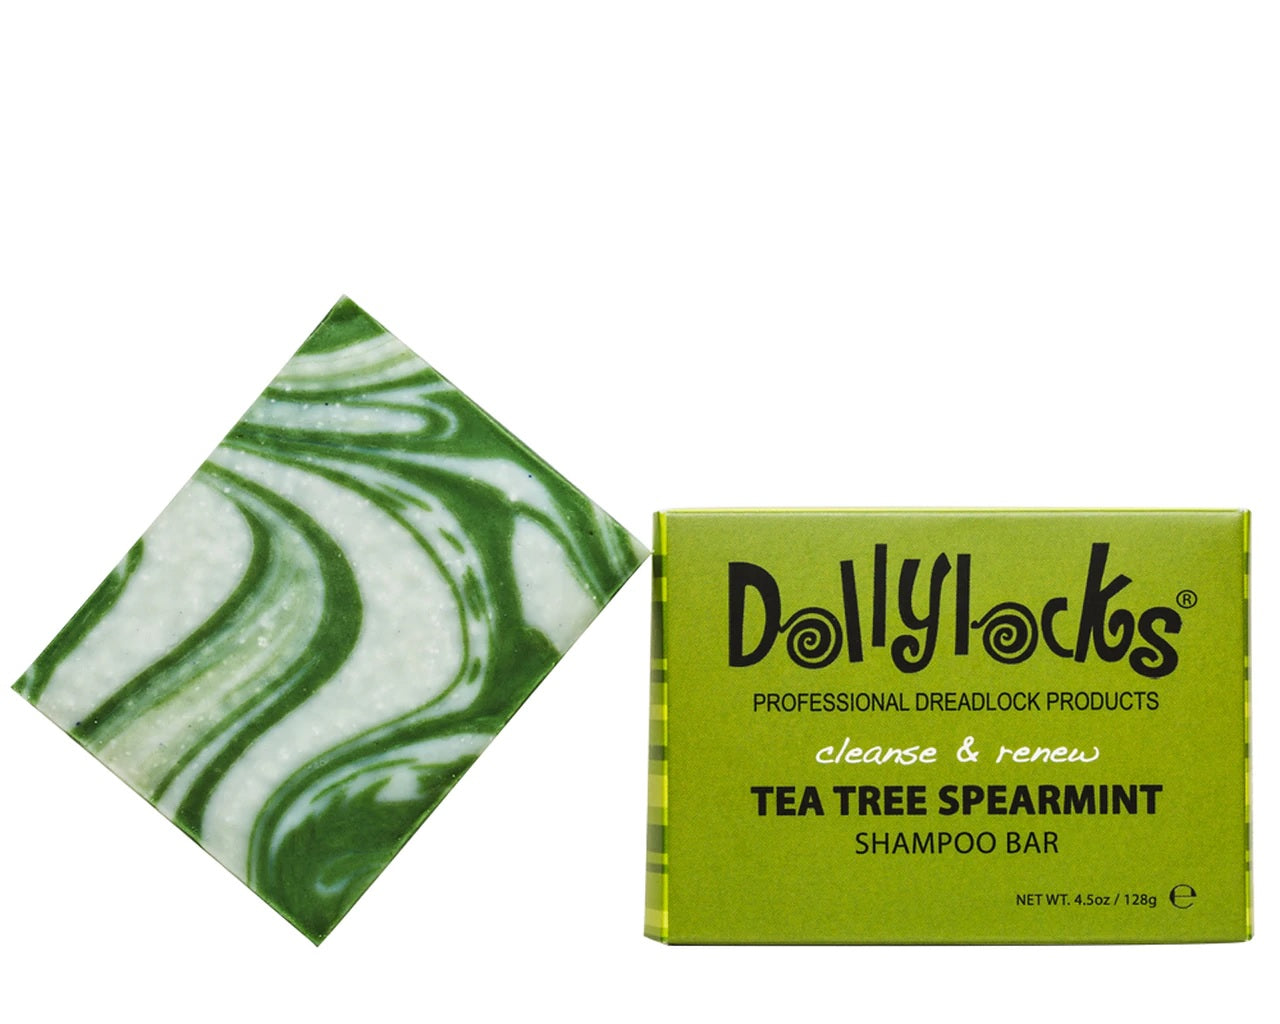 Dollylocks - Dreadlocks Shampoo Bar - Tea Tree Spearmint (4.5oz/127g)